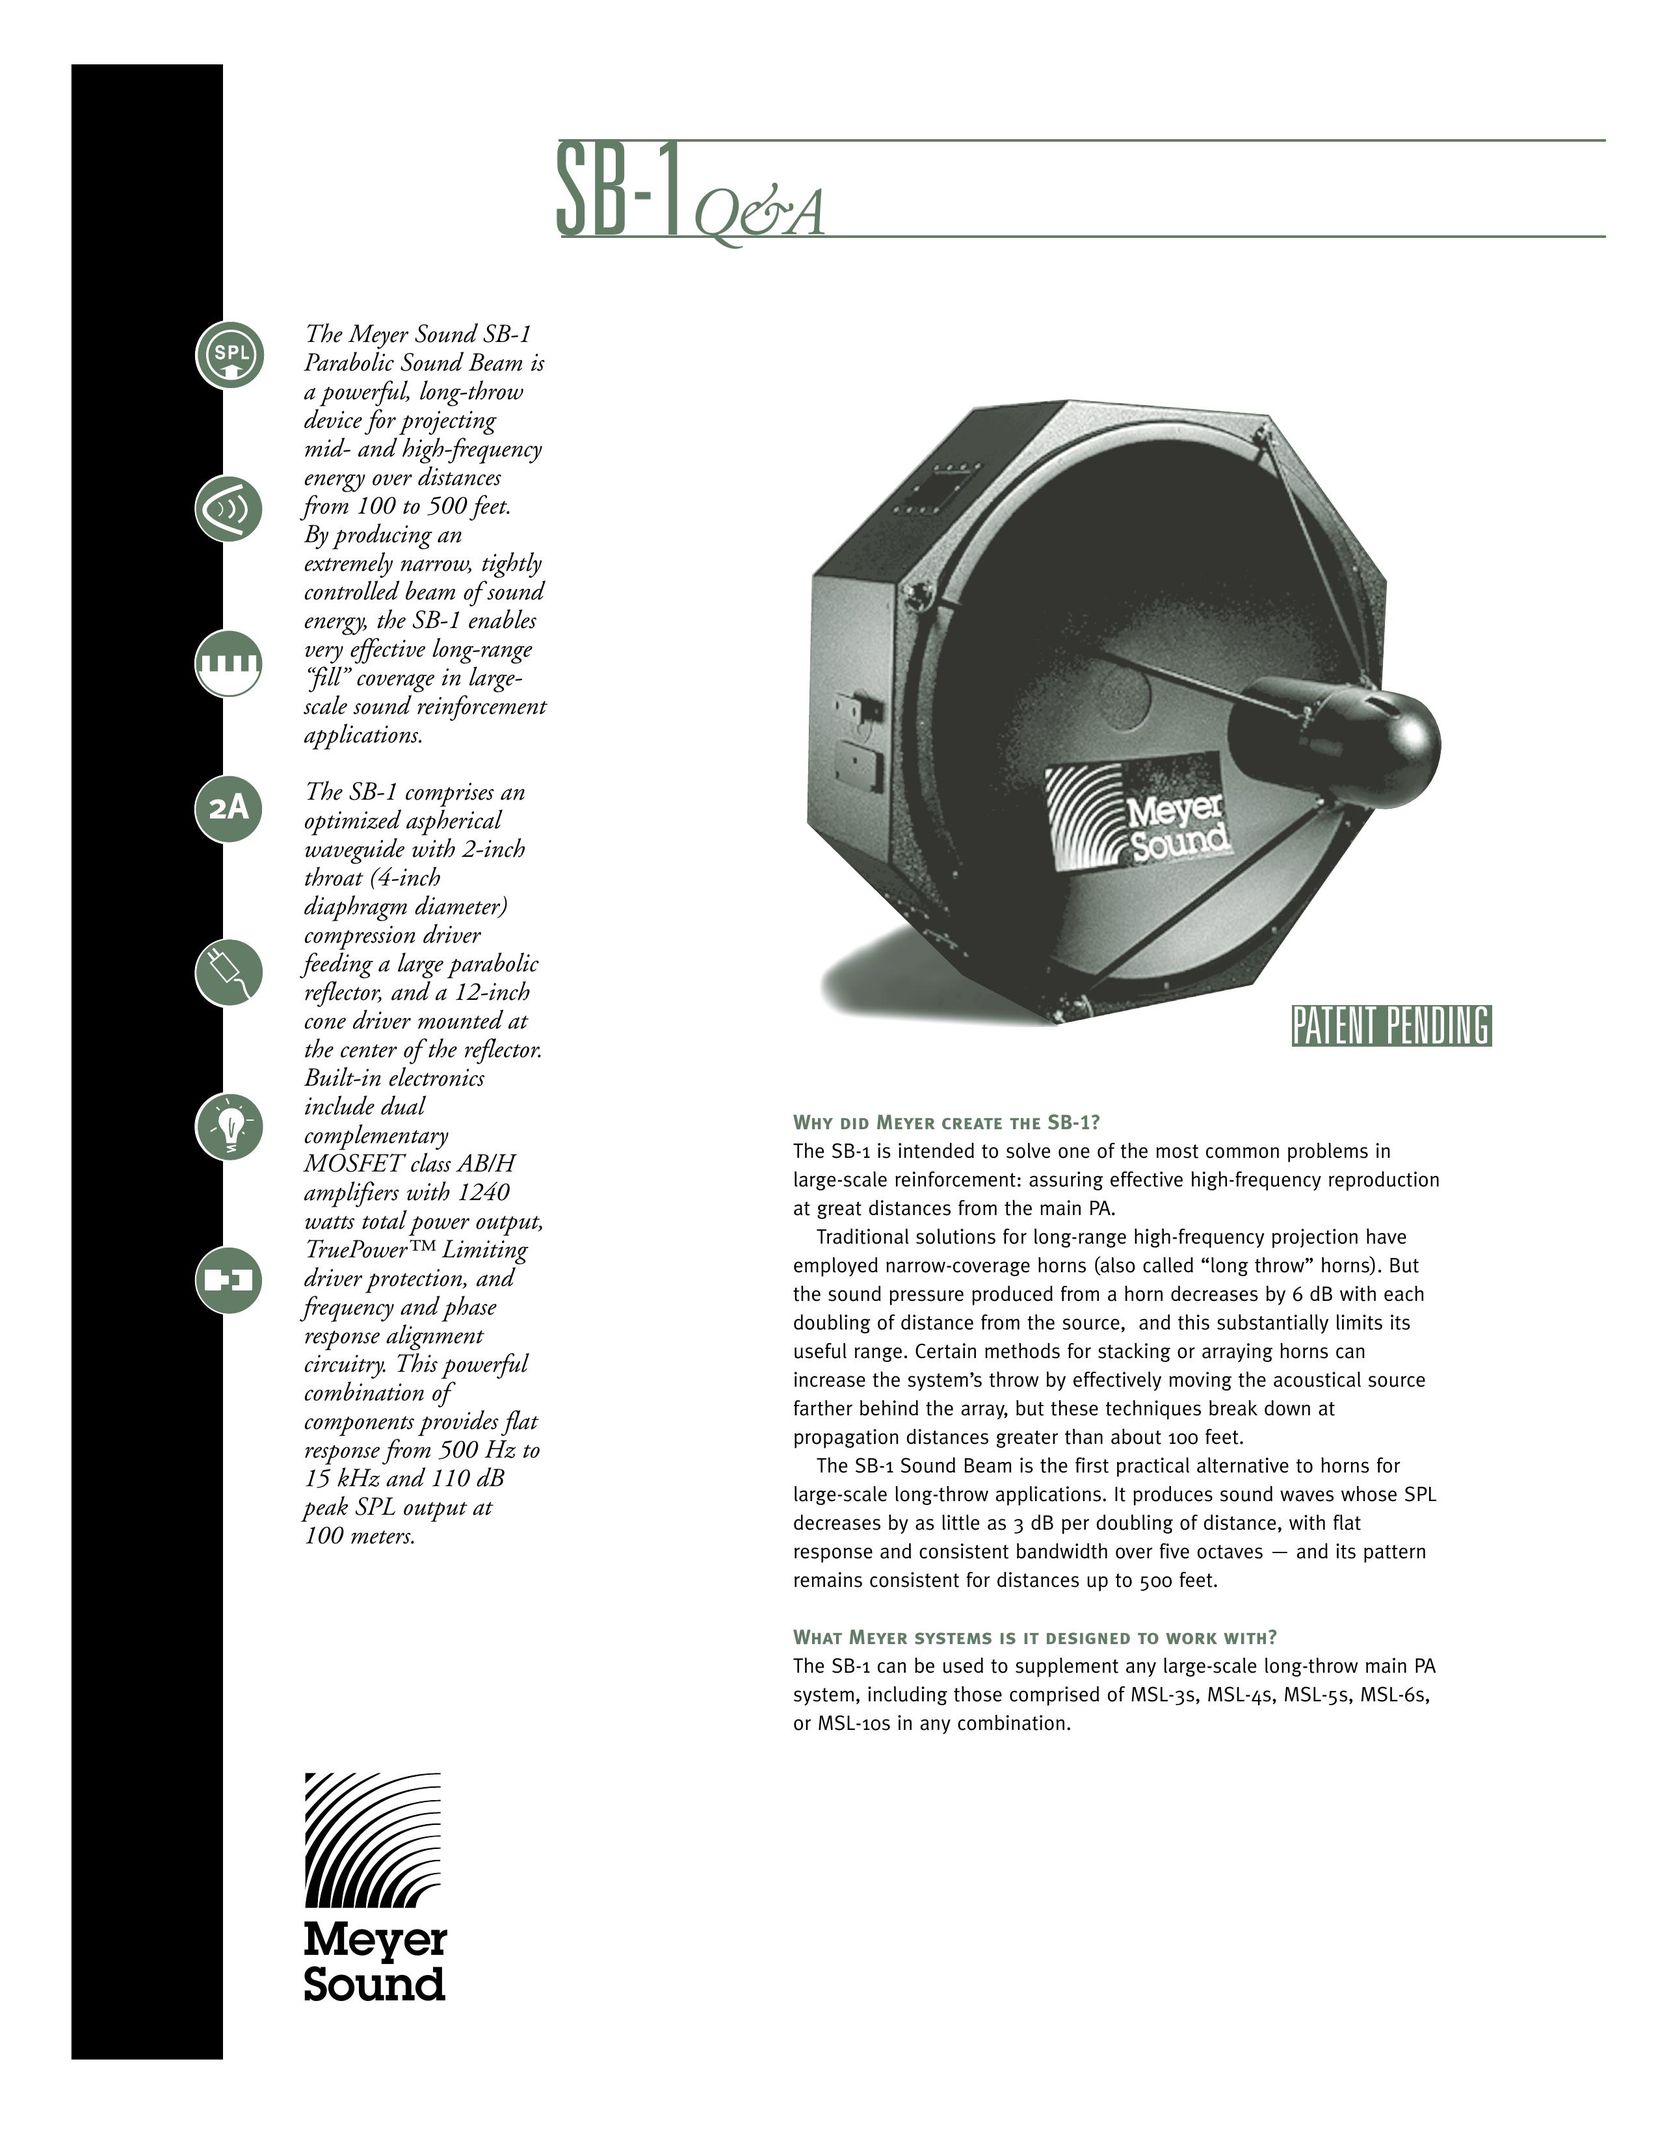 Meyer Sound SB-1 Car Stereo System User Manual